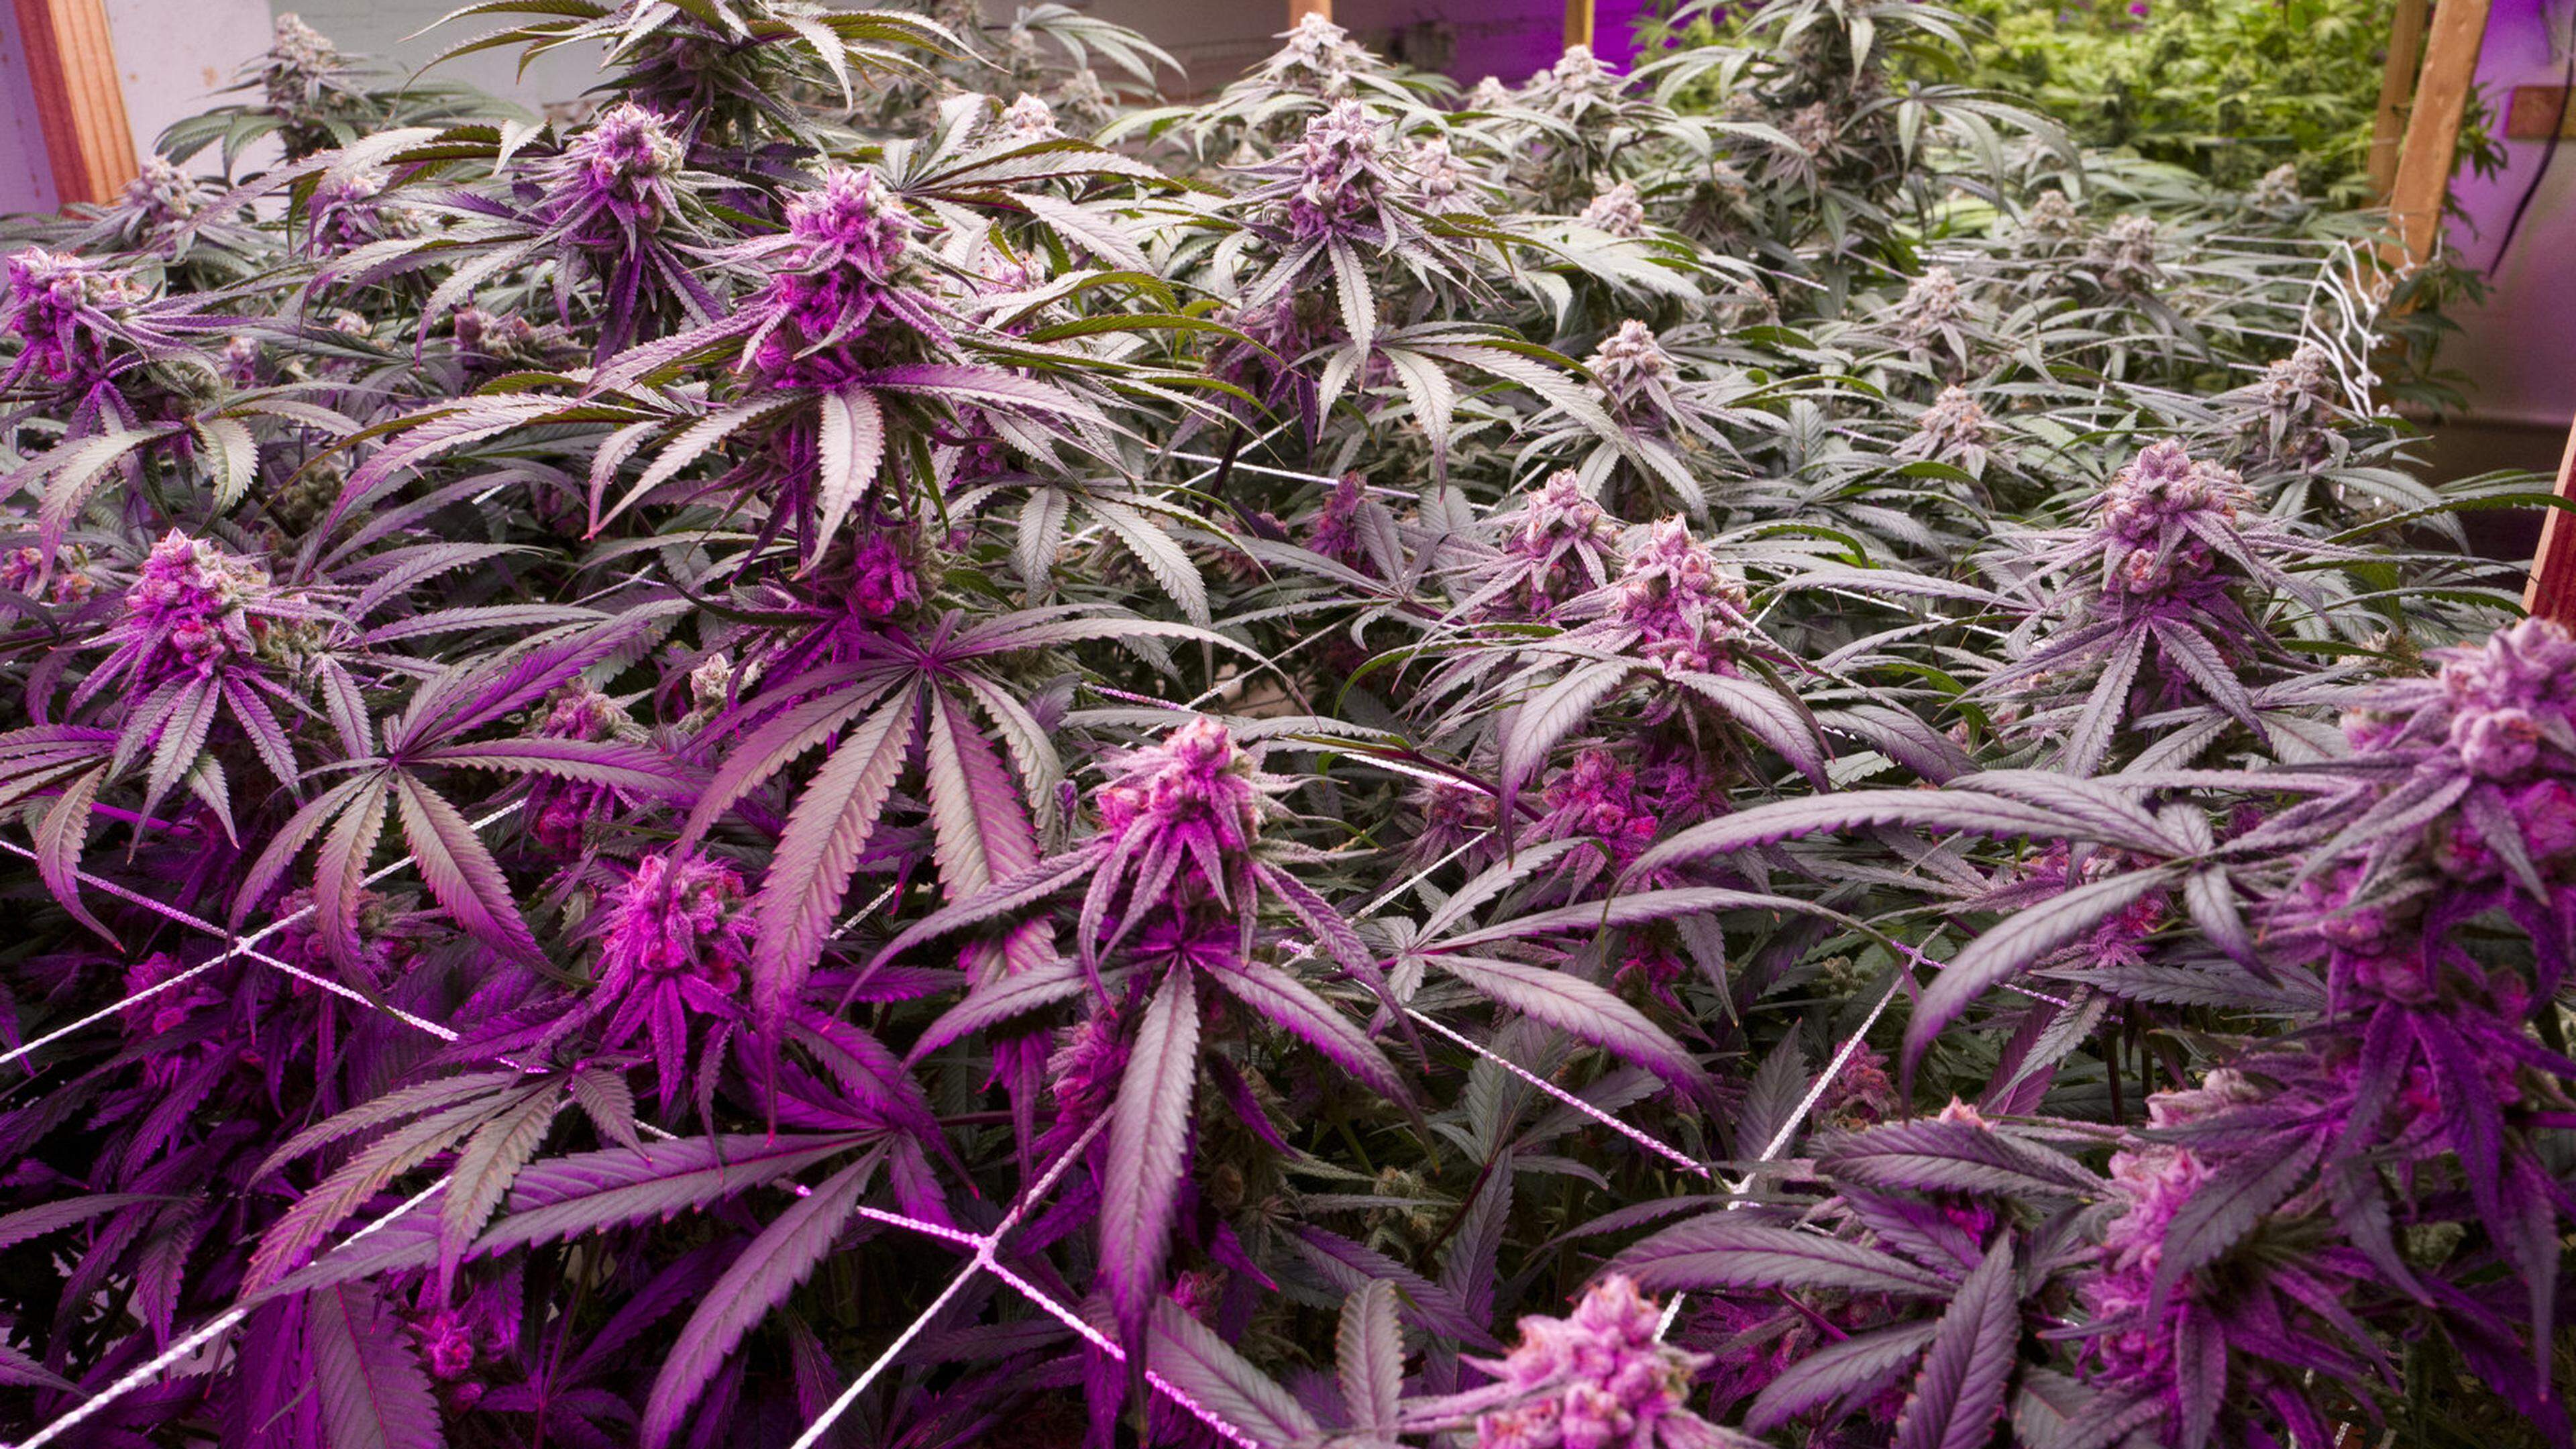 Niederlande: Test mit legalem Marihuana-Anbau startet im Oktober